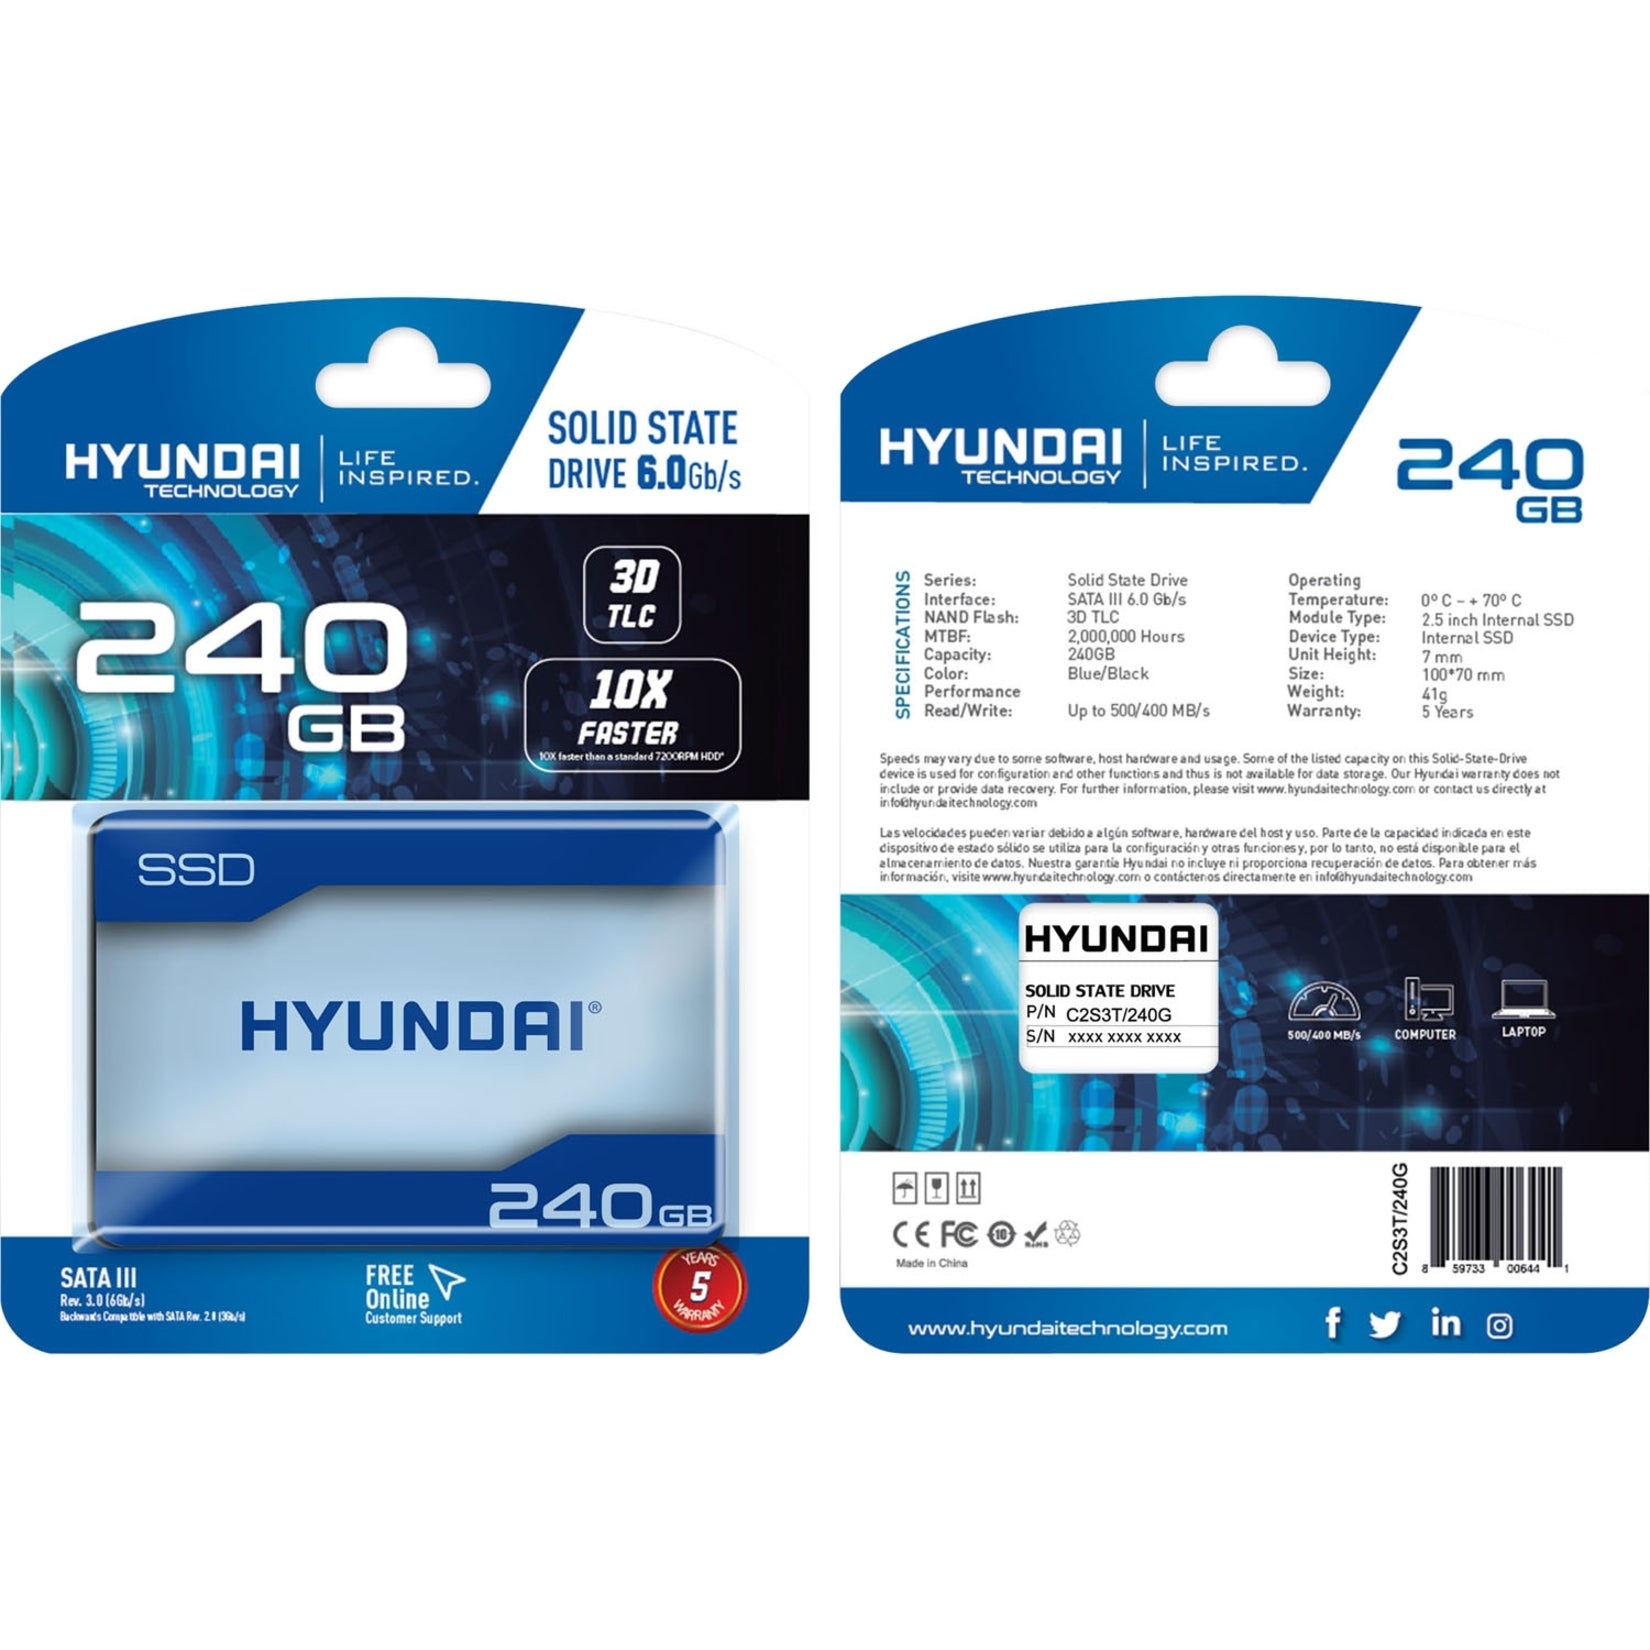 Hyundai C2S3T/240G Solid State Drive, 240GB SATA III TLC, 5 Year Warranty, 80 TB Endurance